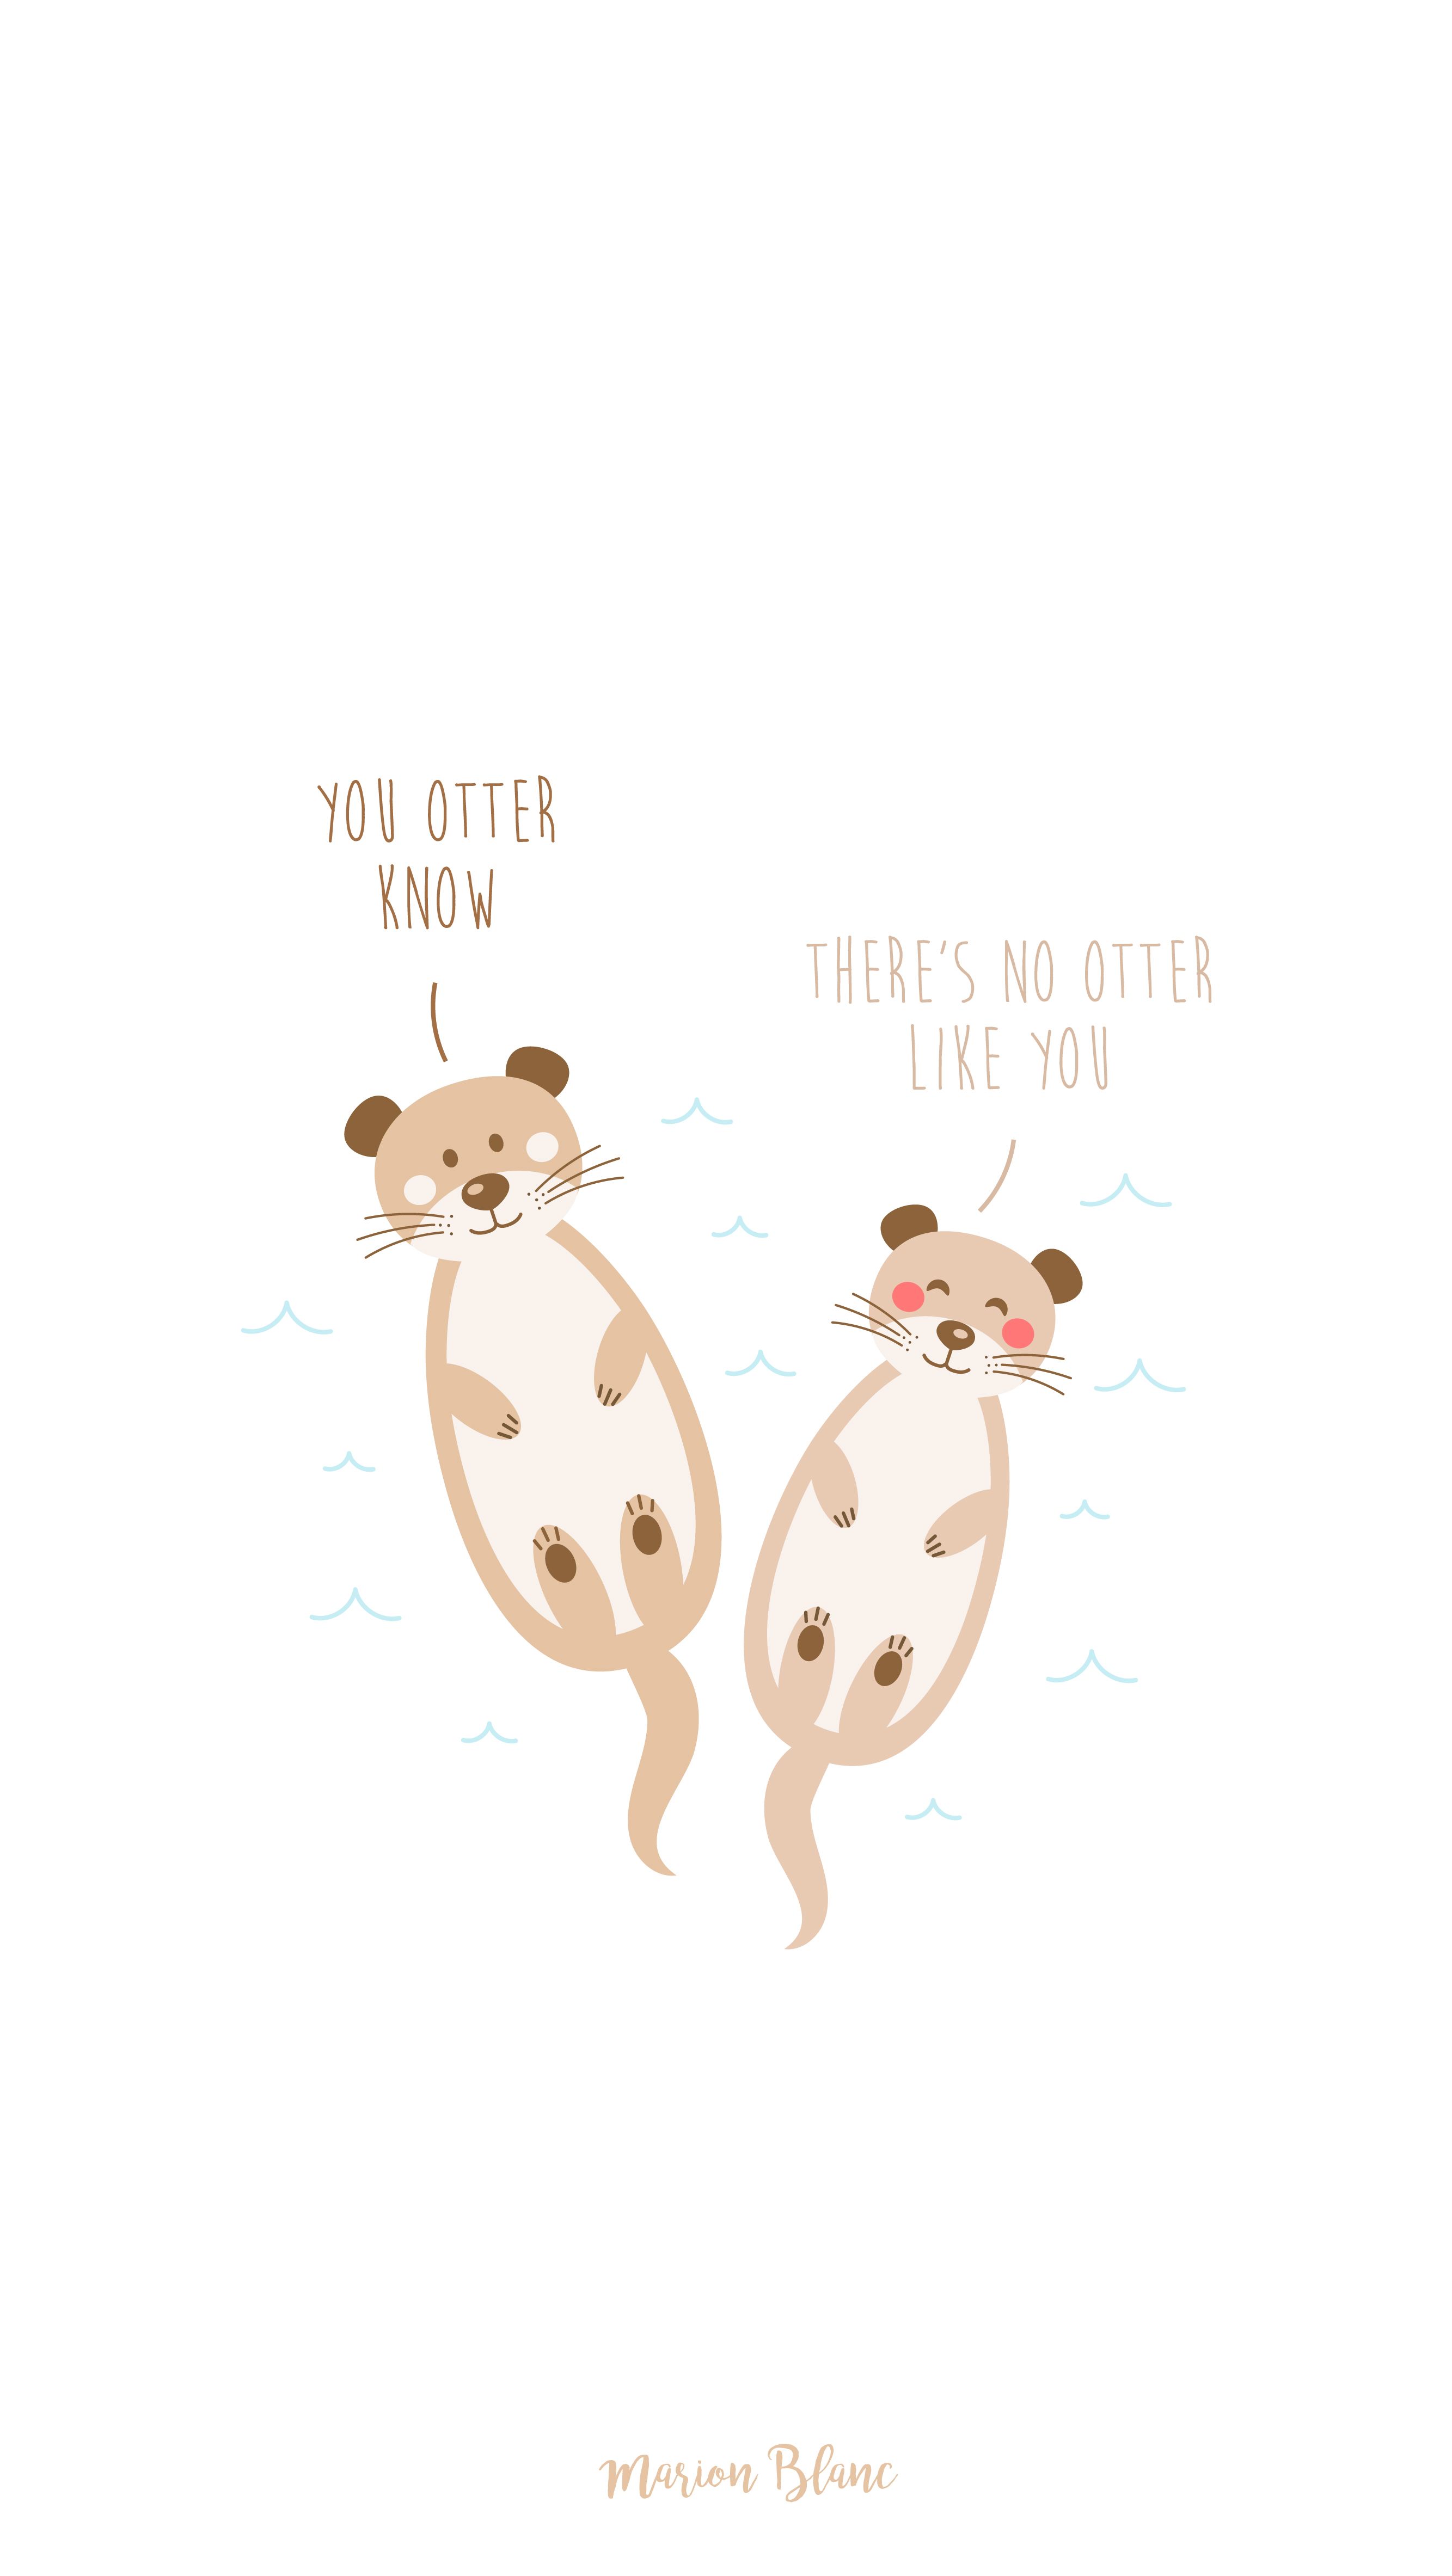 Otter illustration quote Blanc. iPhone wallpaper, Pretty wallpaper, Otter illustration